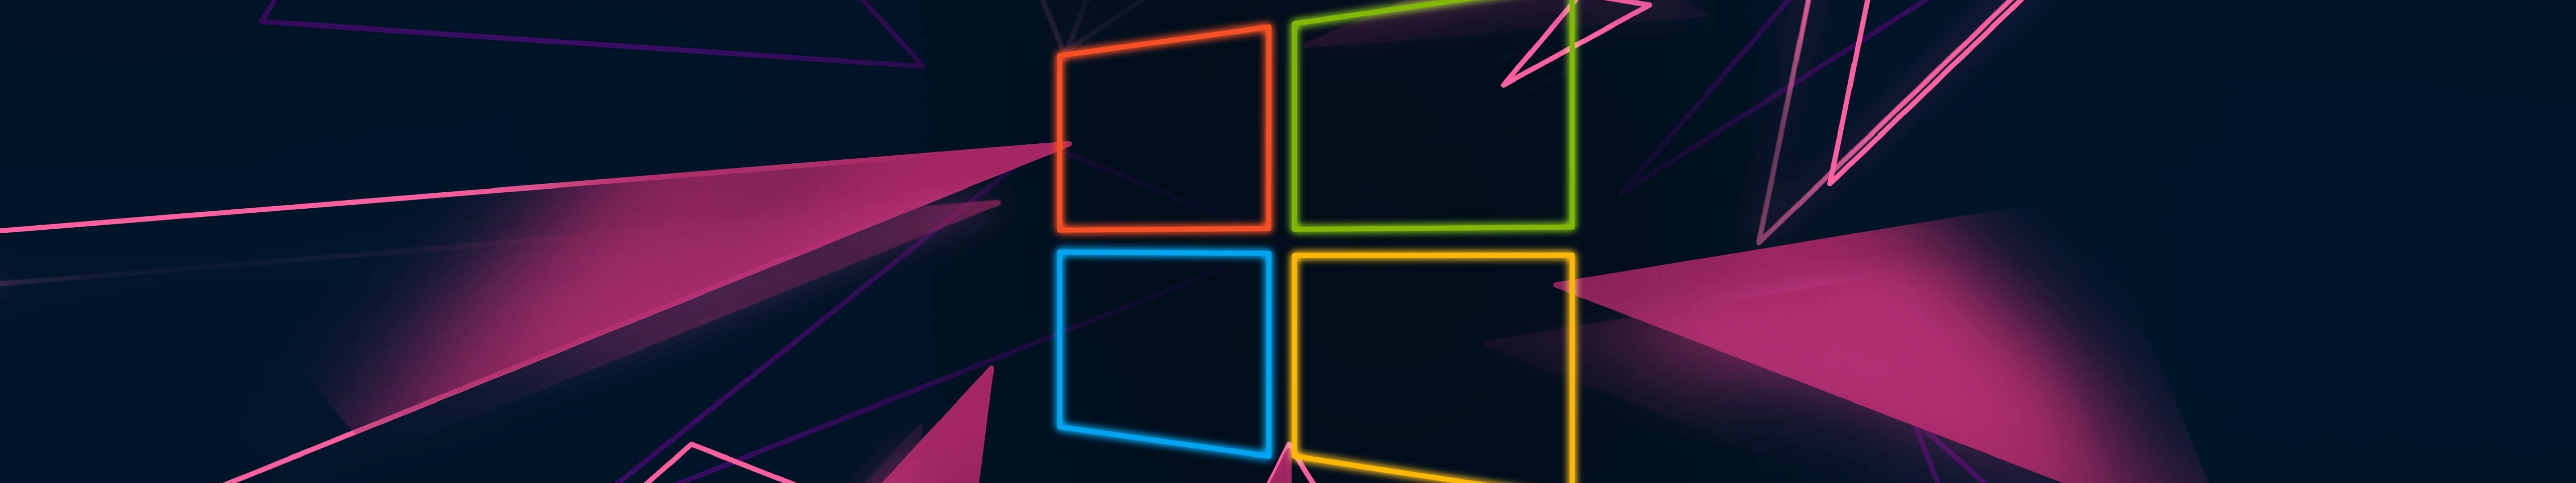 7680x1440 Windows 10 Neon Logo 7680x1440 Resolution Wallpaper Hd